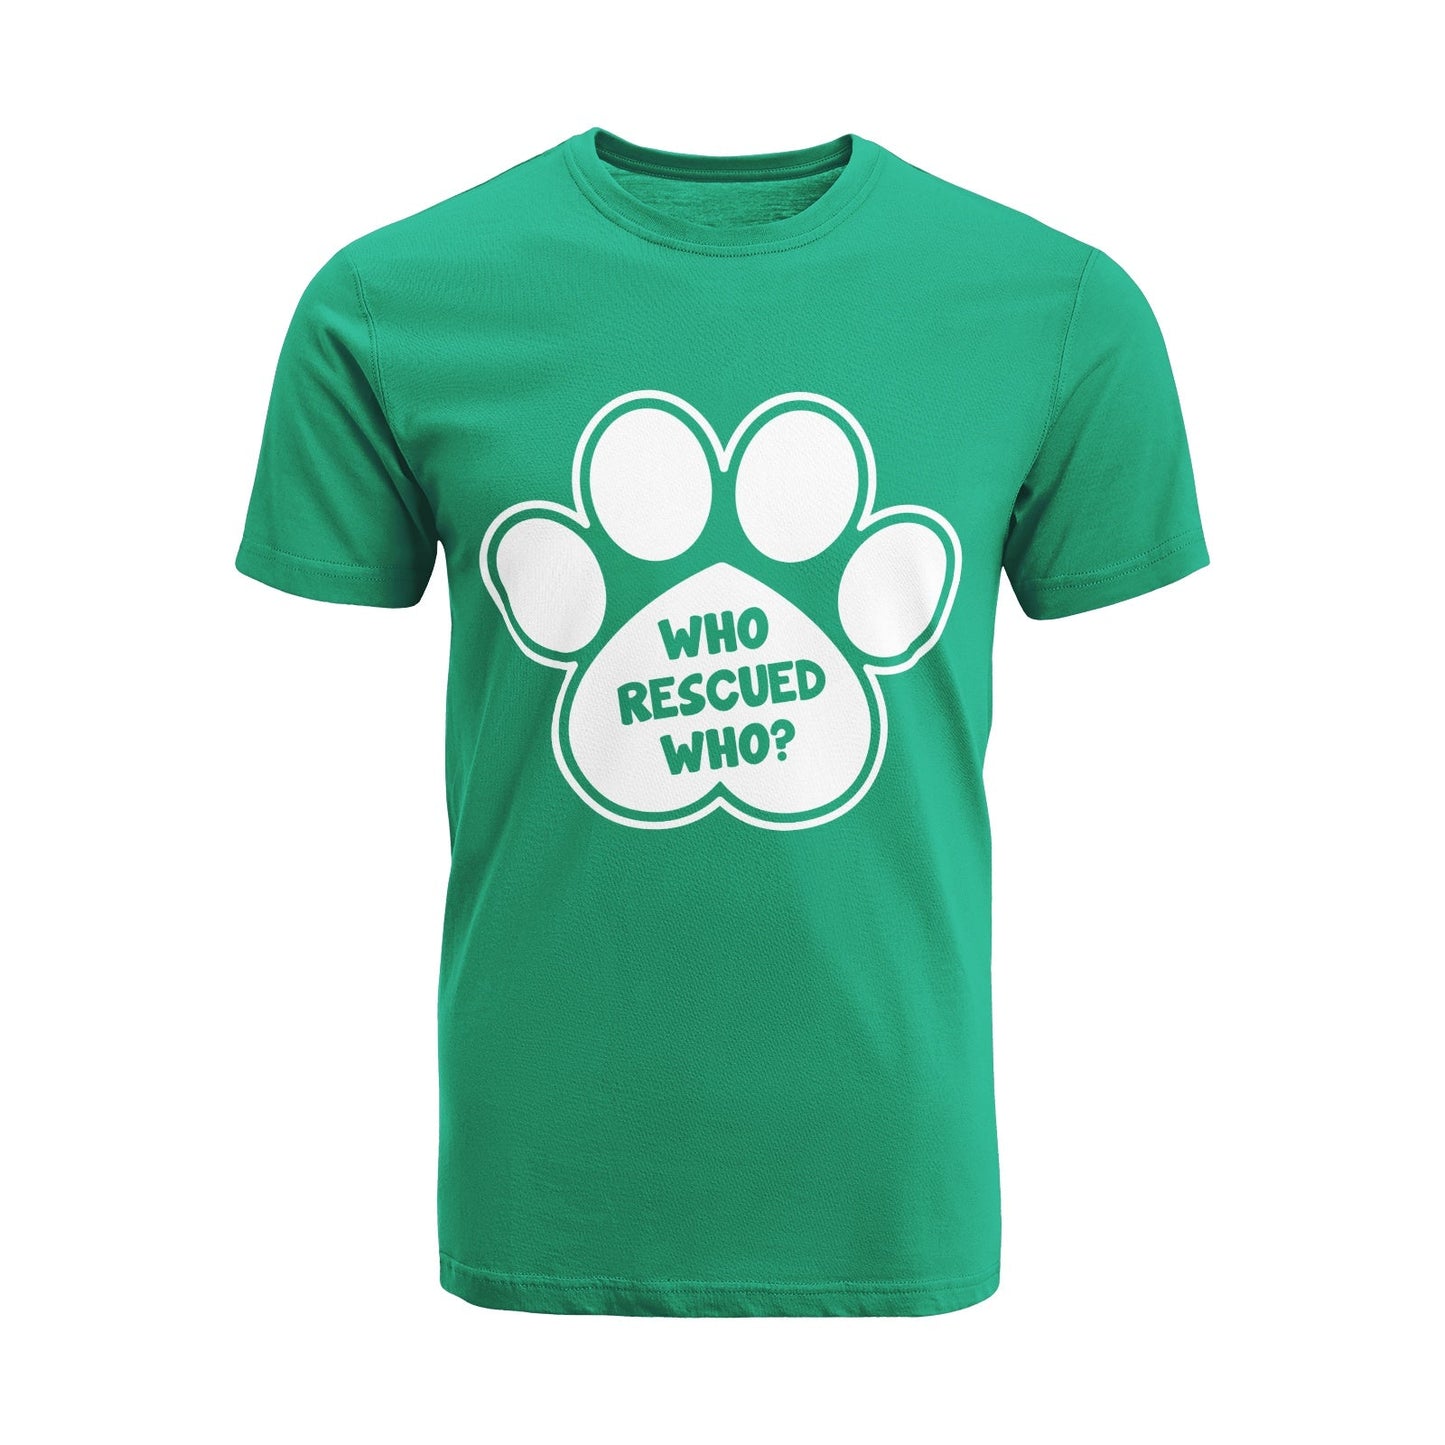 Unisex Short Sleeve Crew Neck Cotton Jersey T-Shirt DOG 46